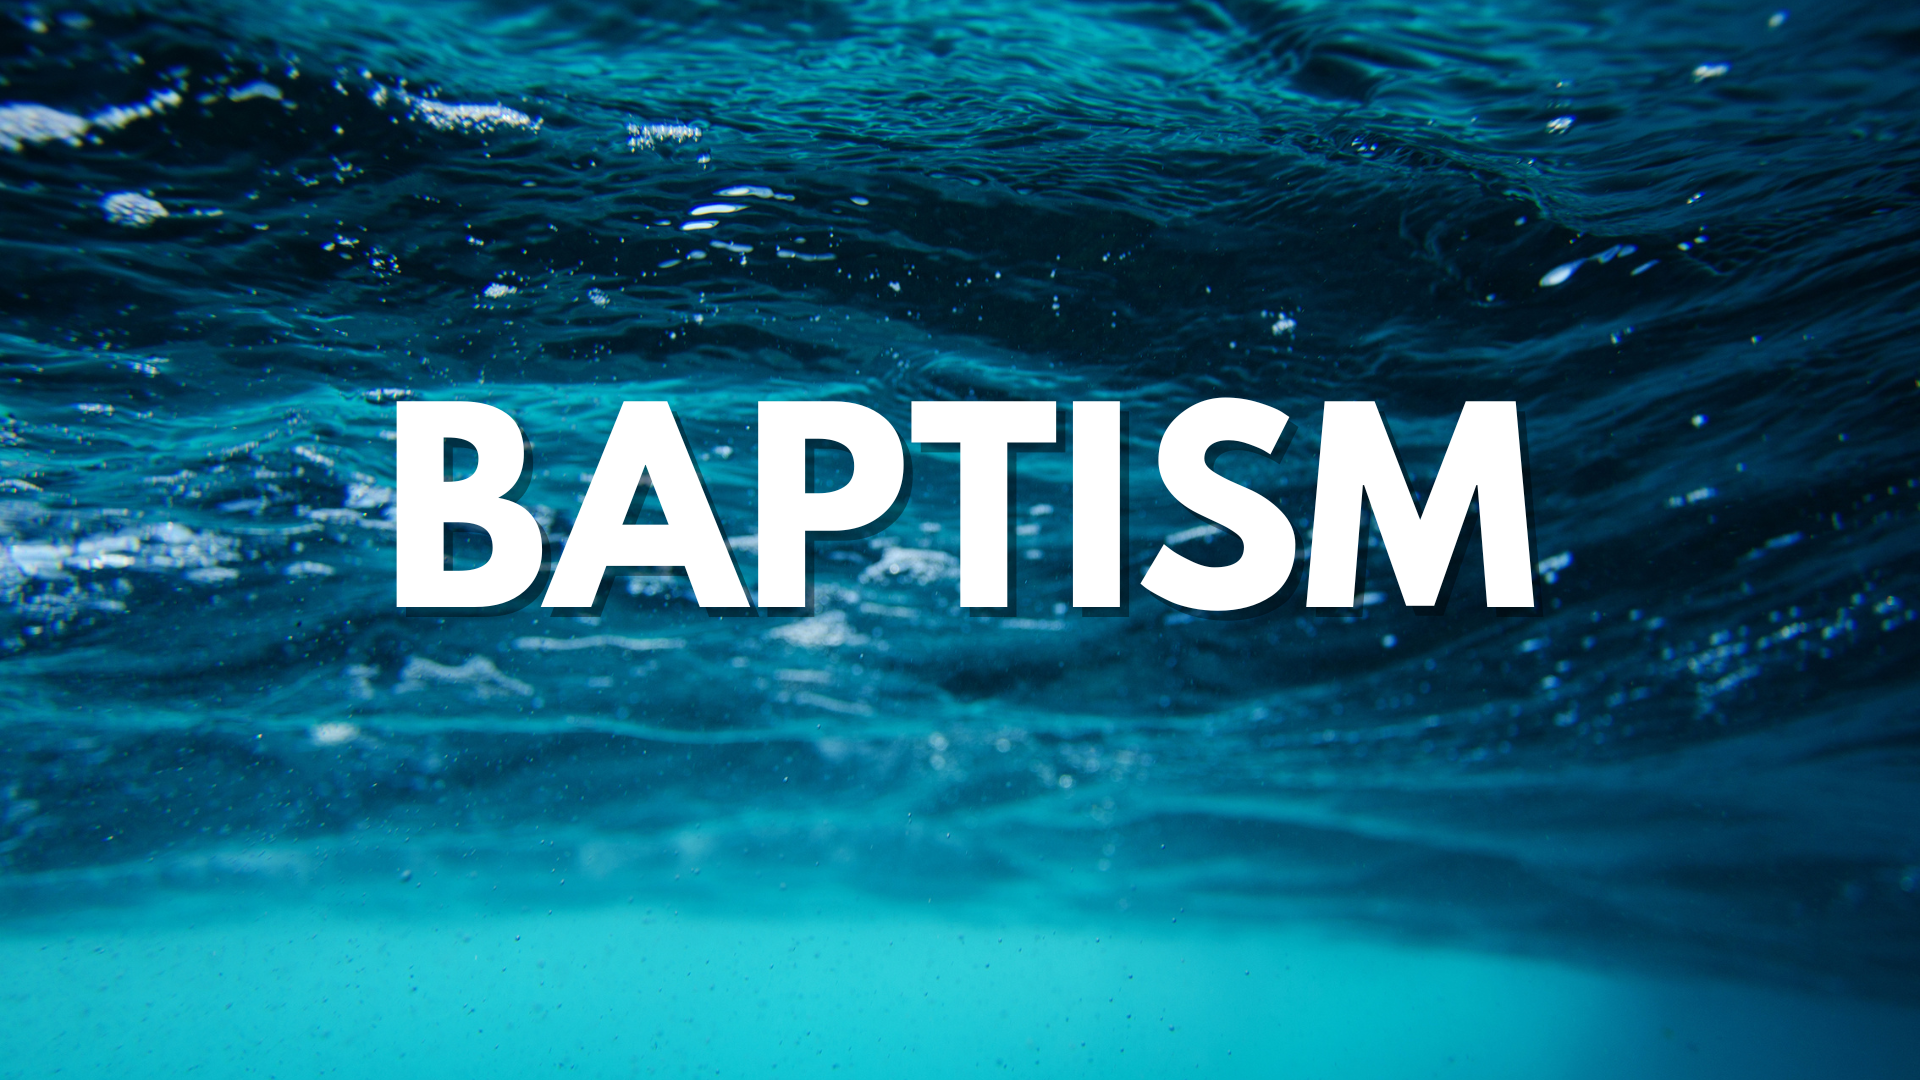 Baptism (1920 × 1080 px).png